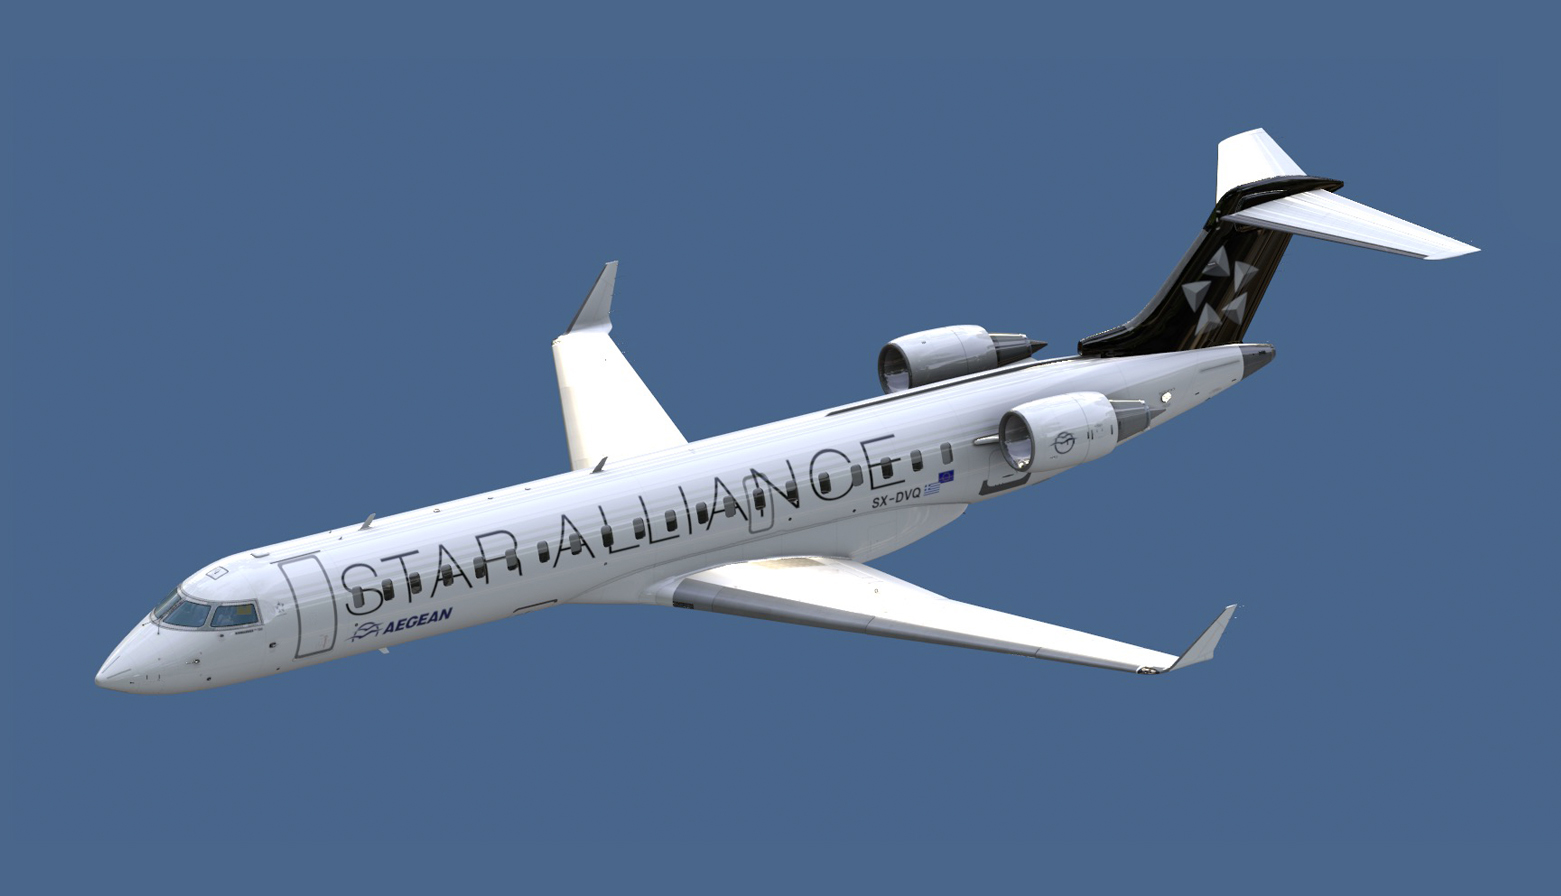 Aegean Airlines - Star Alliance